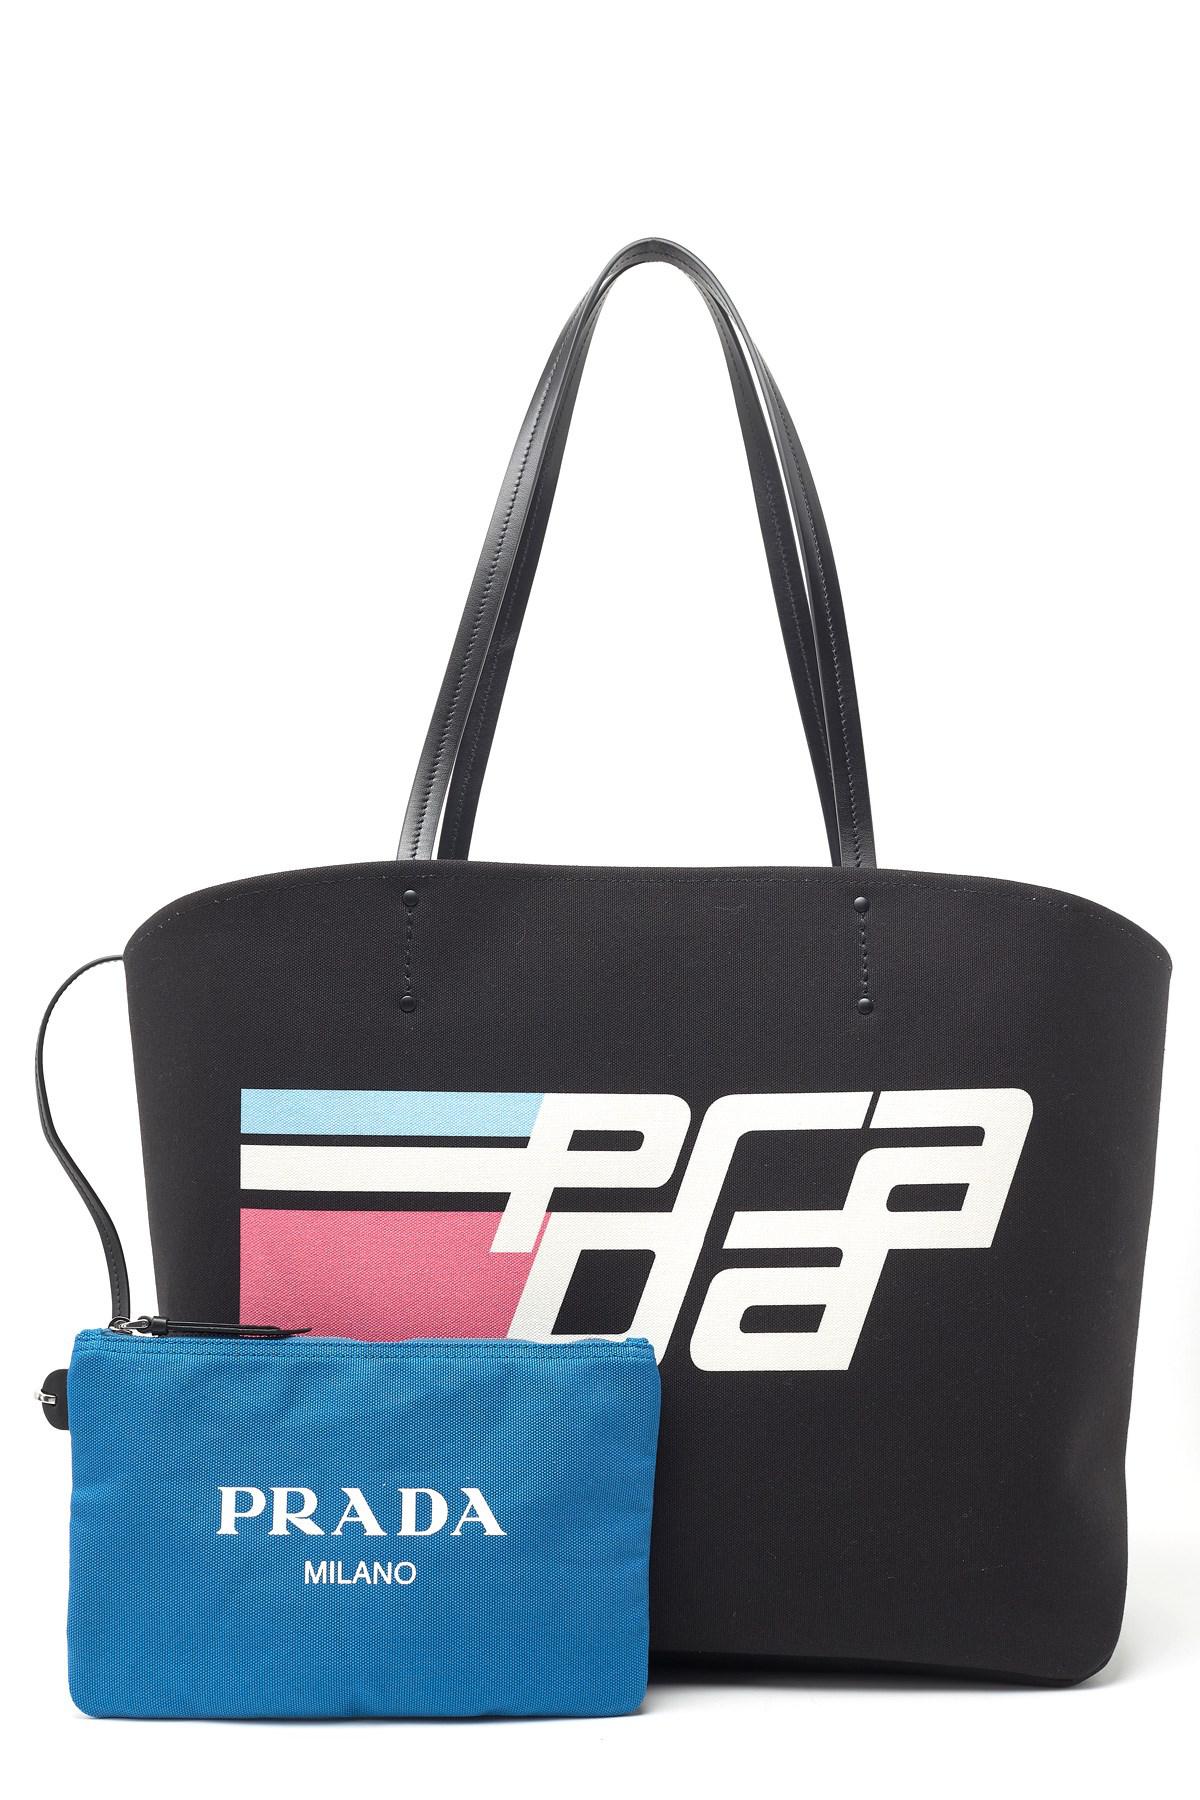 prada racing logo bag